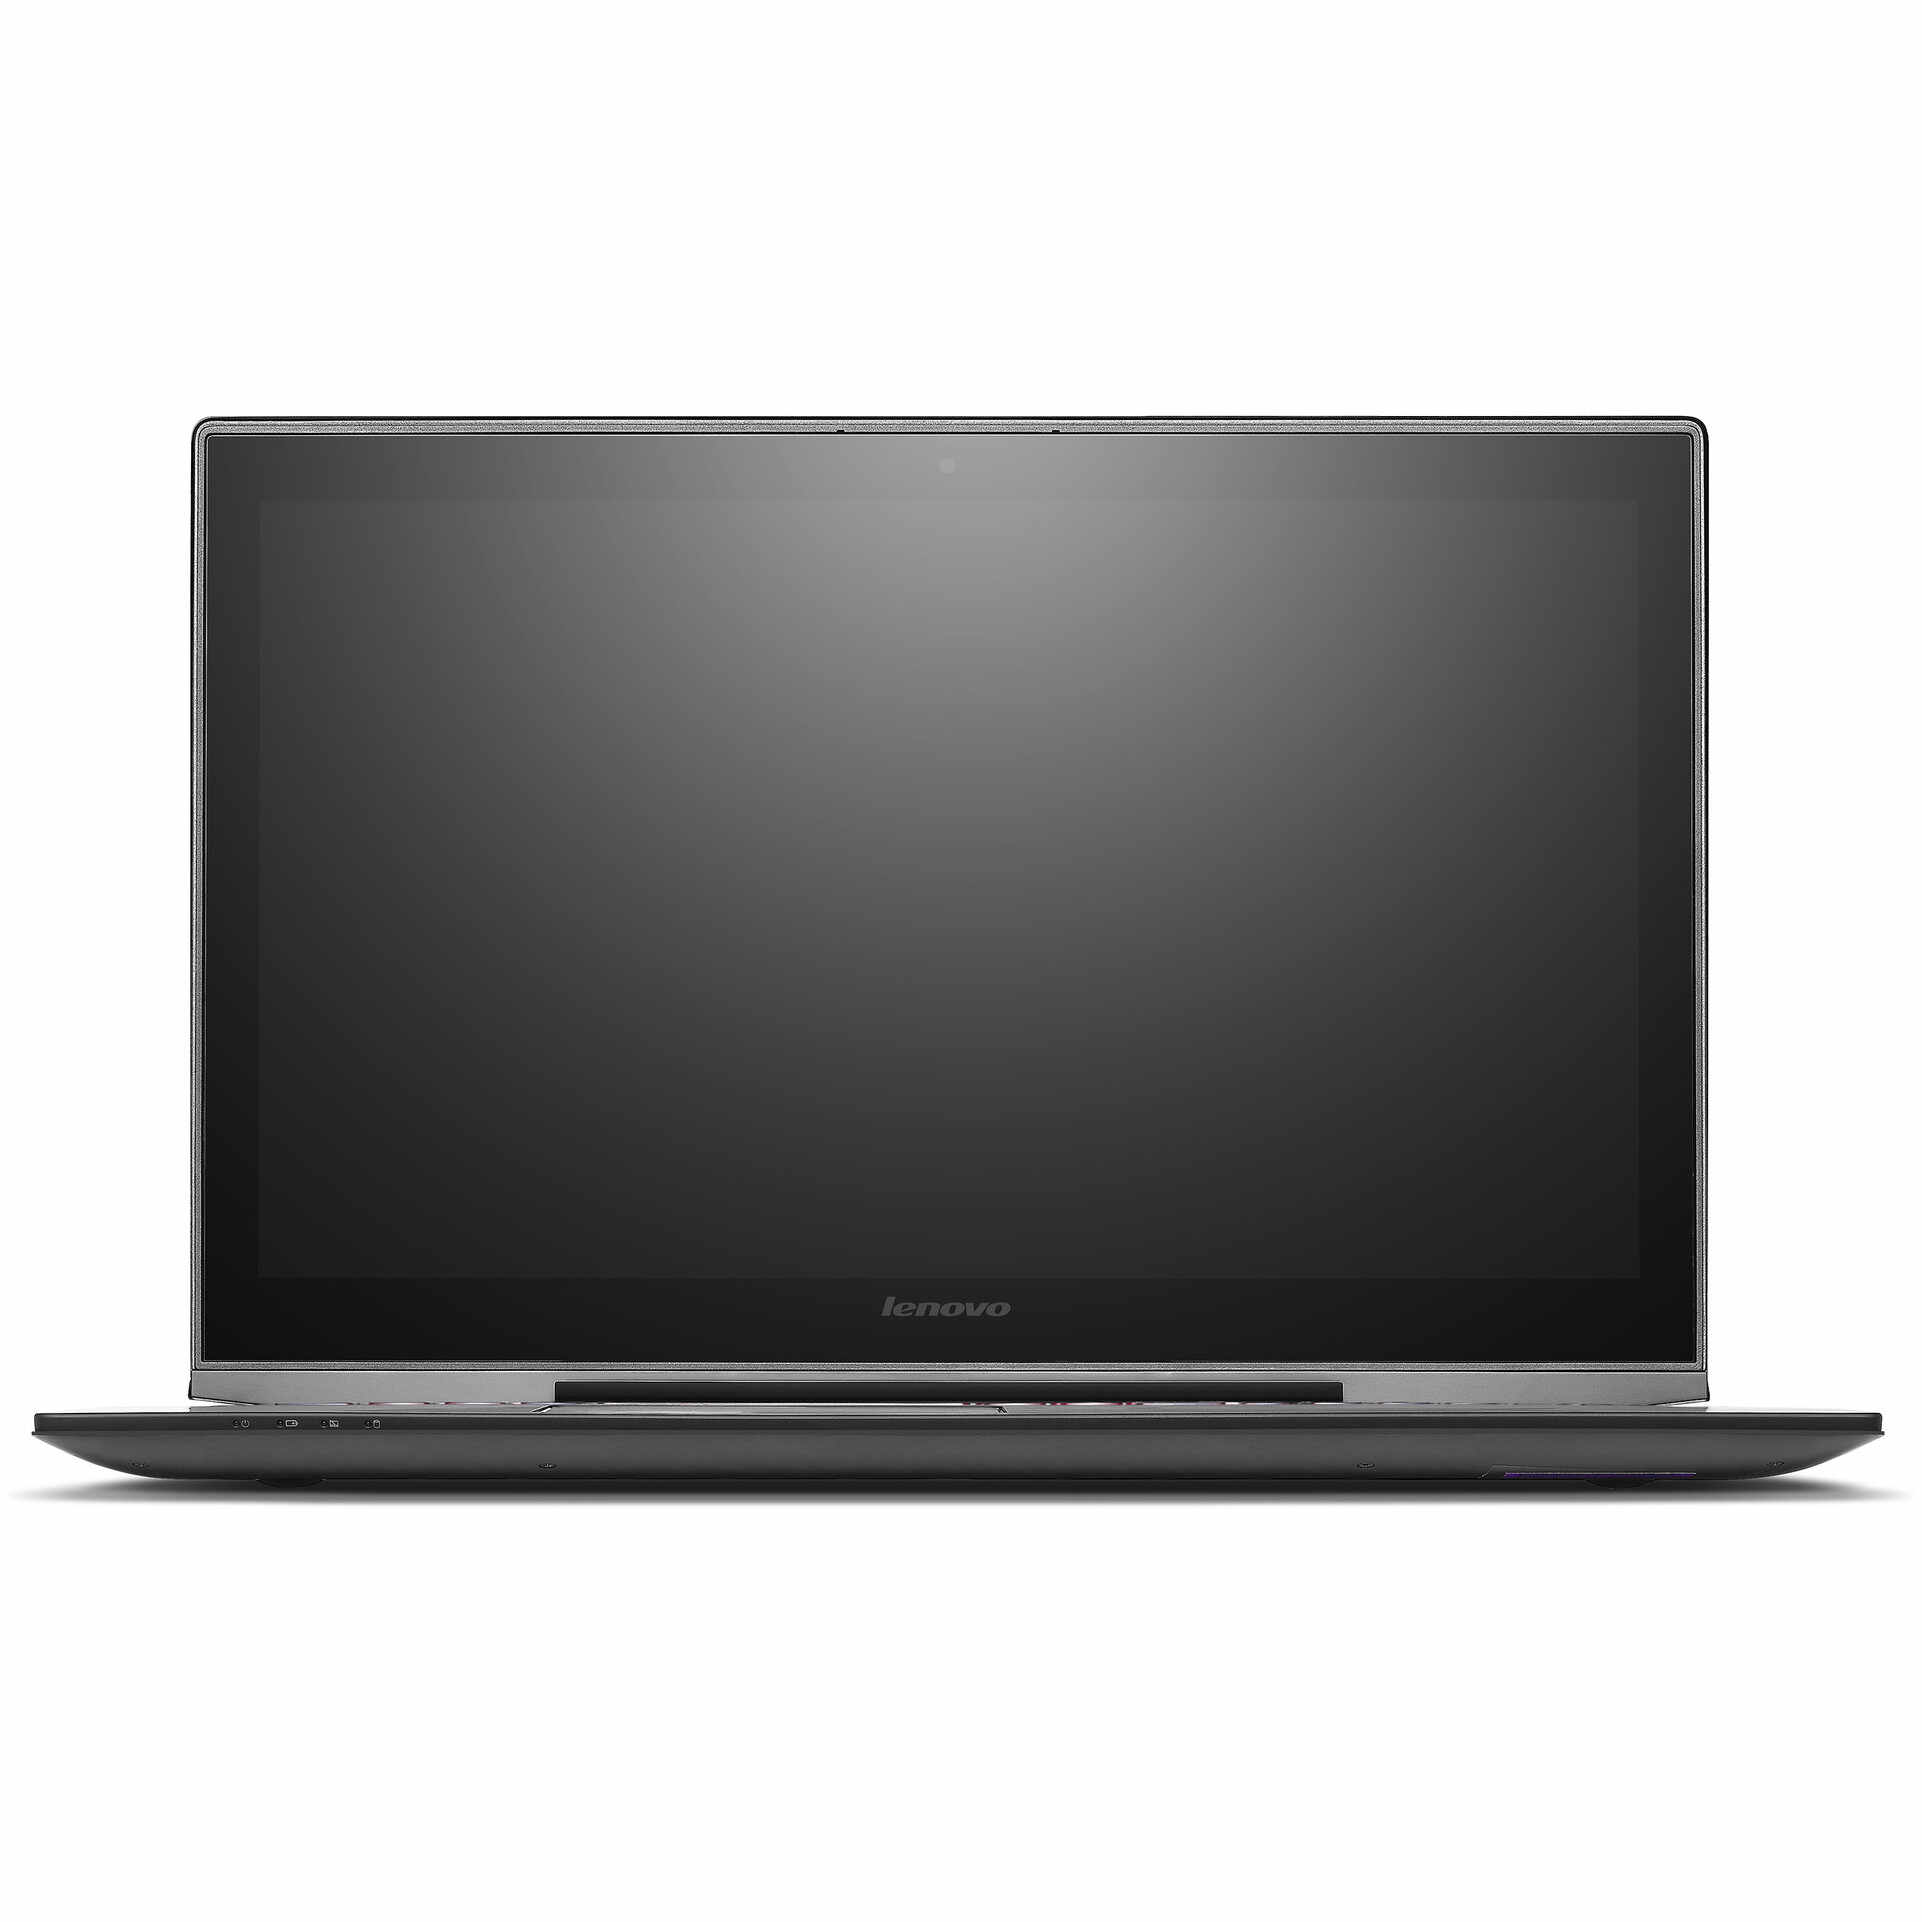 Laptop Lenovo Y70-70, Intel Core i7-4720HQ, 8GB DDR3, SSD 256GB, nVidia GeForce GTX 960M 4GB, Windows 8